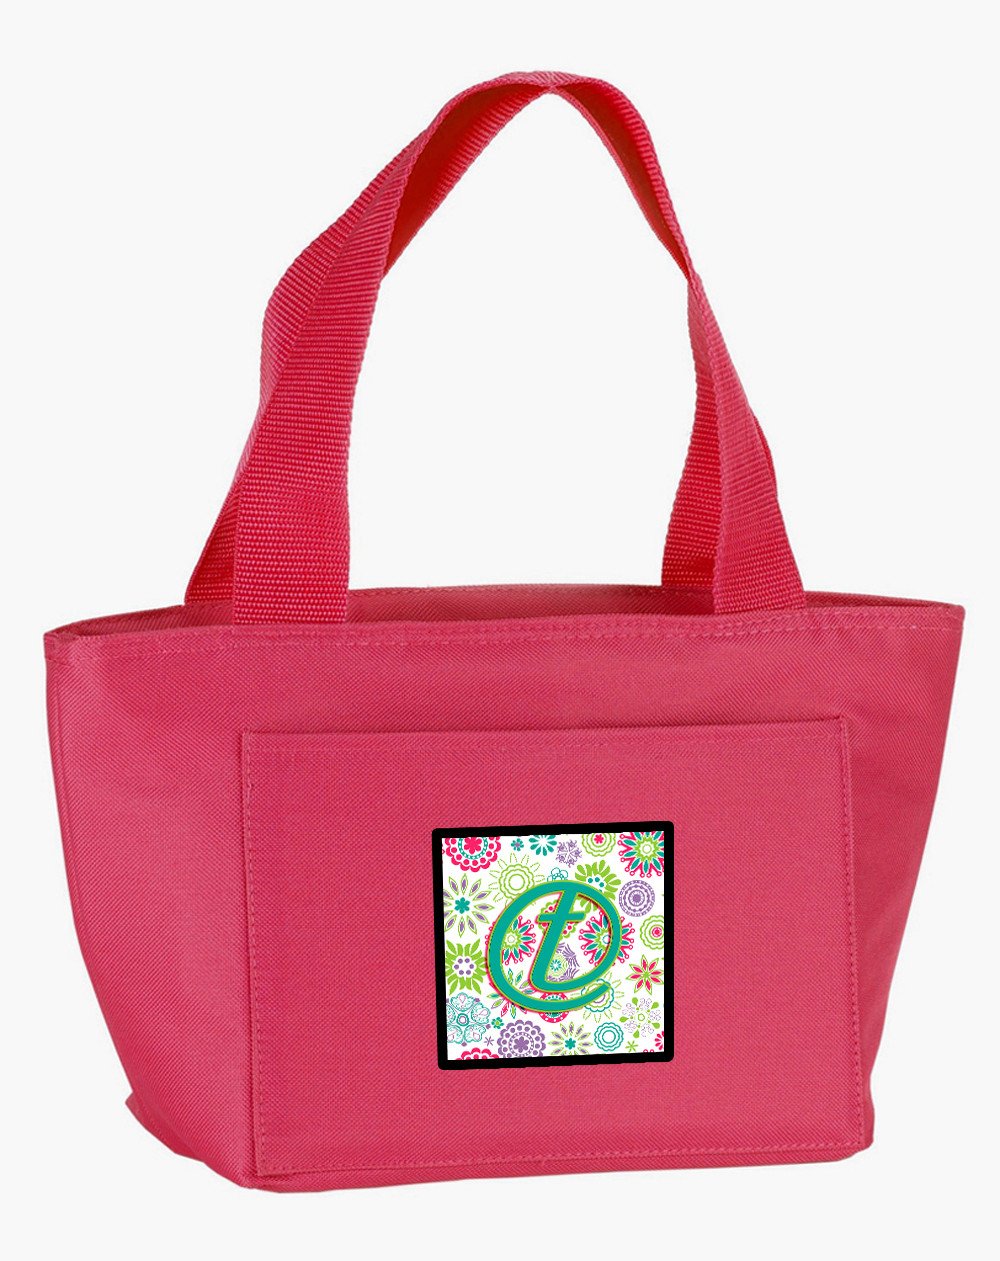 Letter T Flowers Pink Teal Green Initial Lunch Bag CJ2011-TPK-8808 by Caroline's Treasures